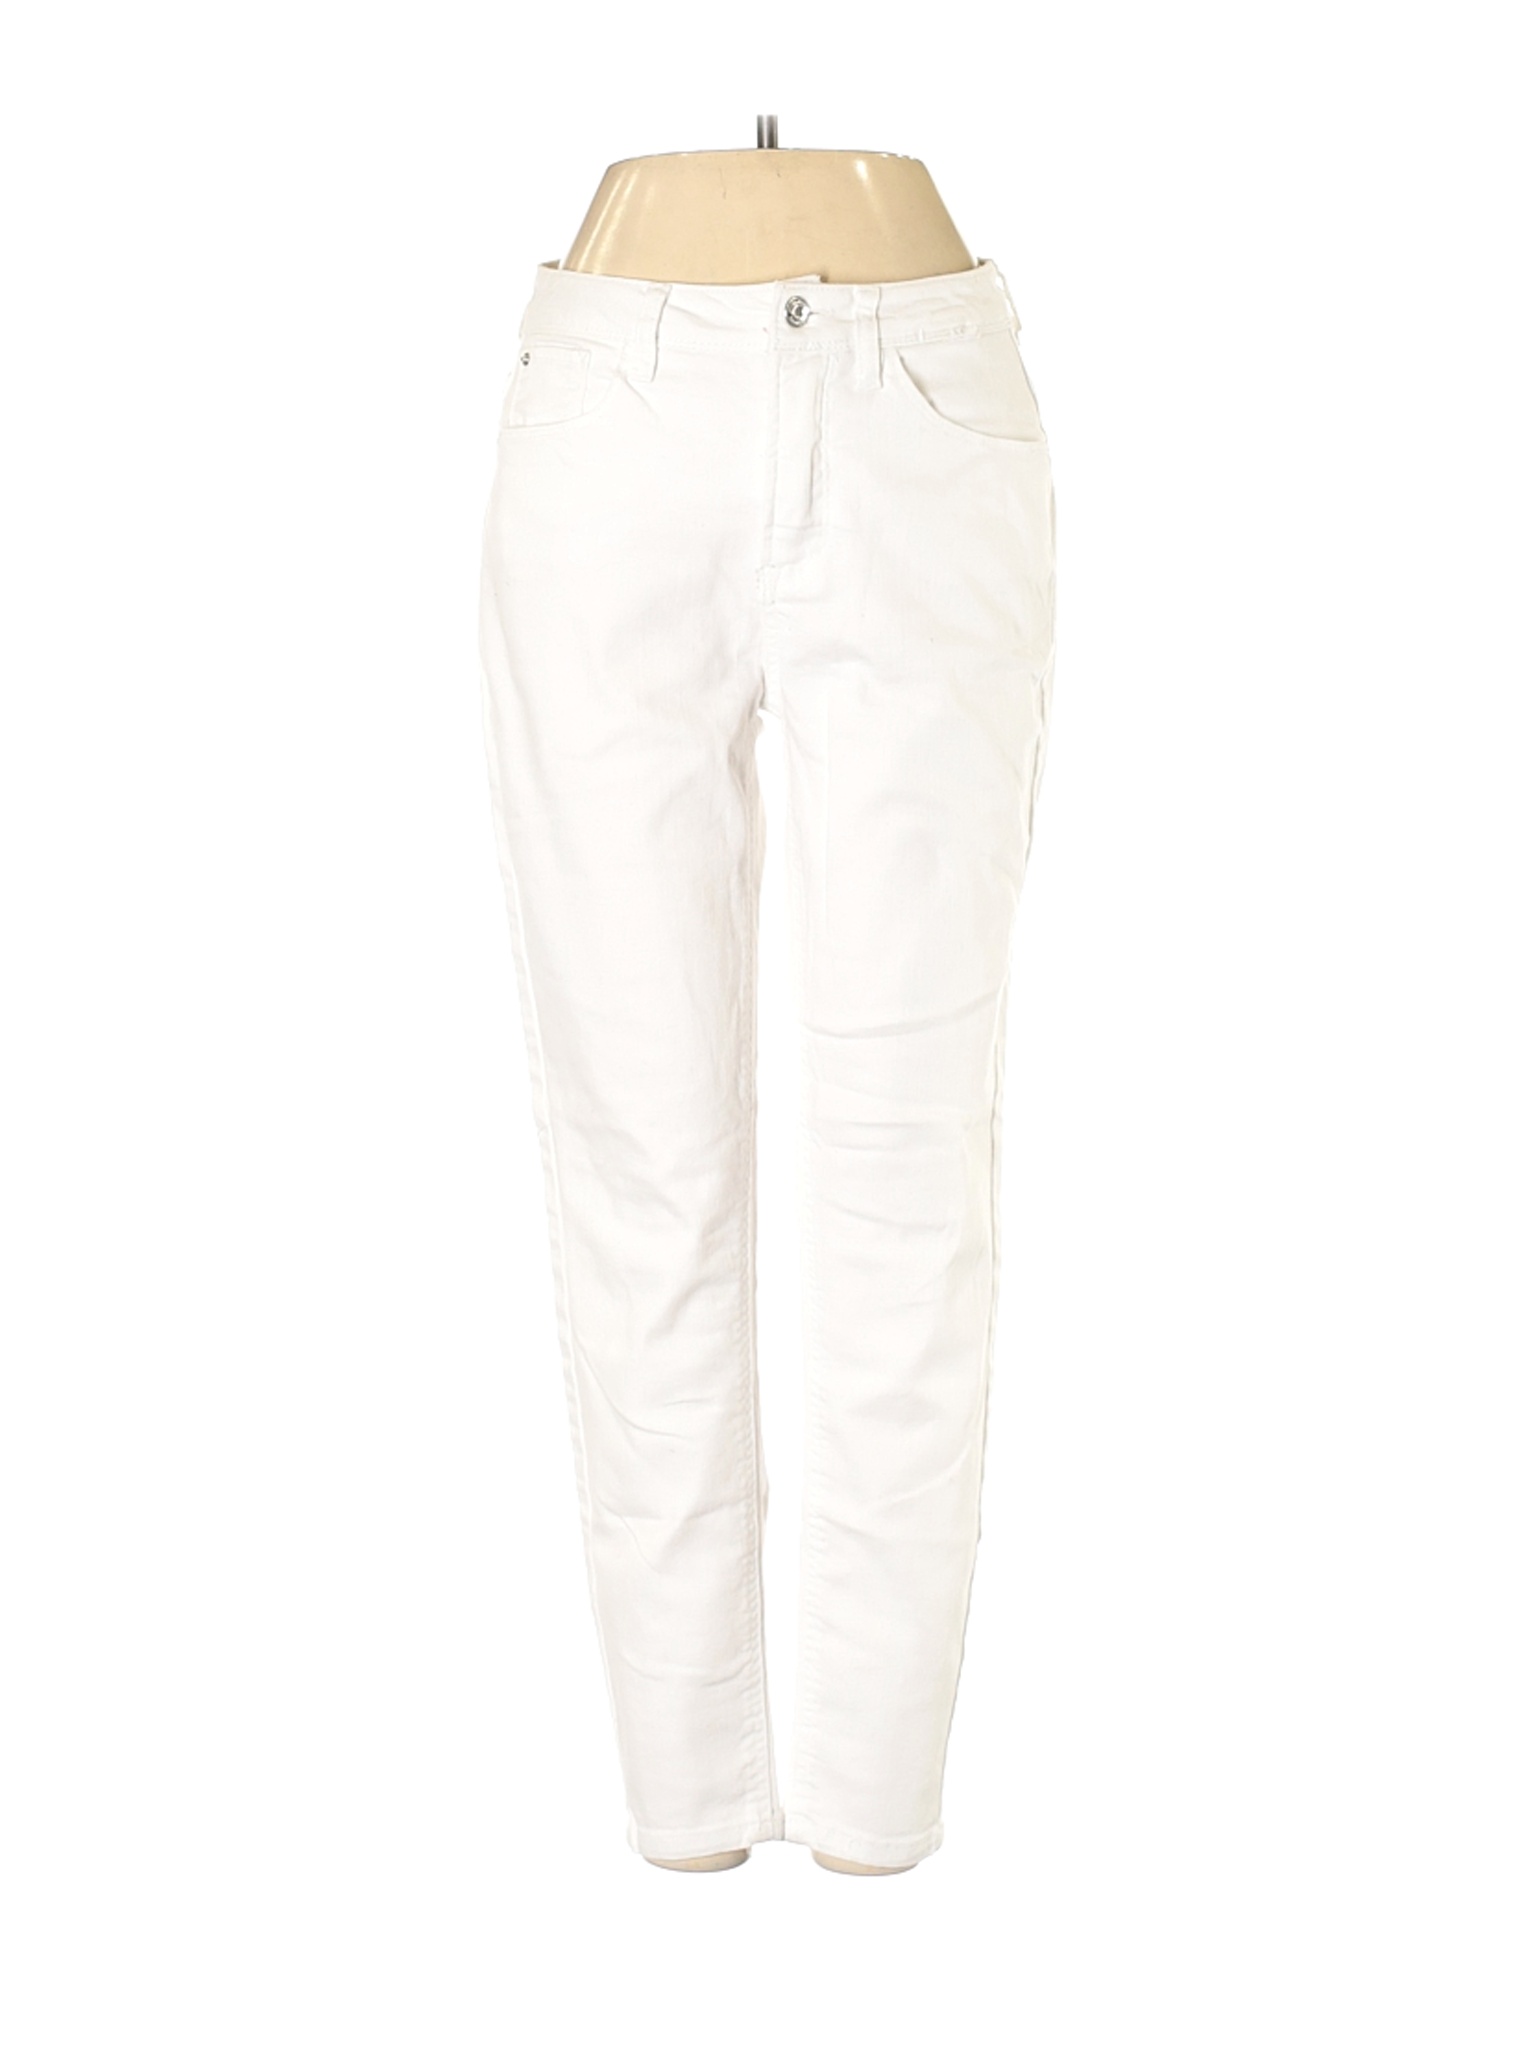 Kensie Women White Jeans 4 | eBay